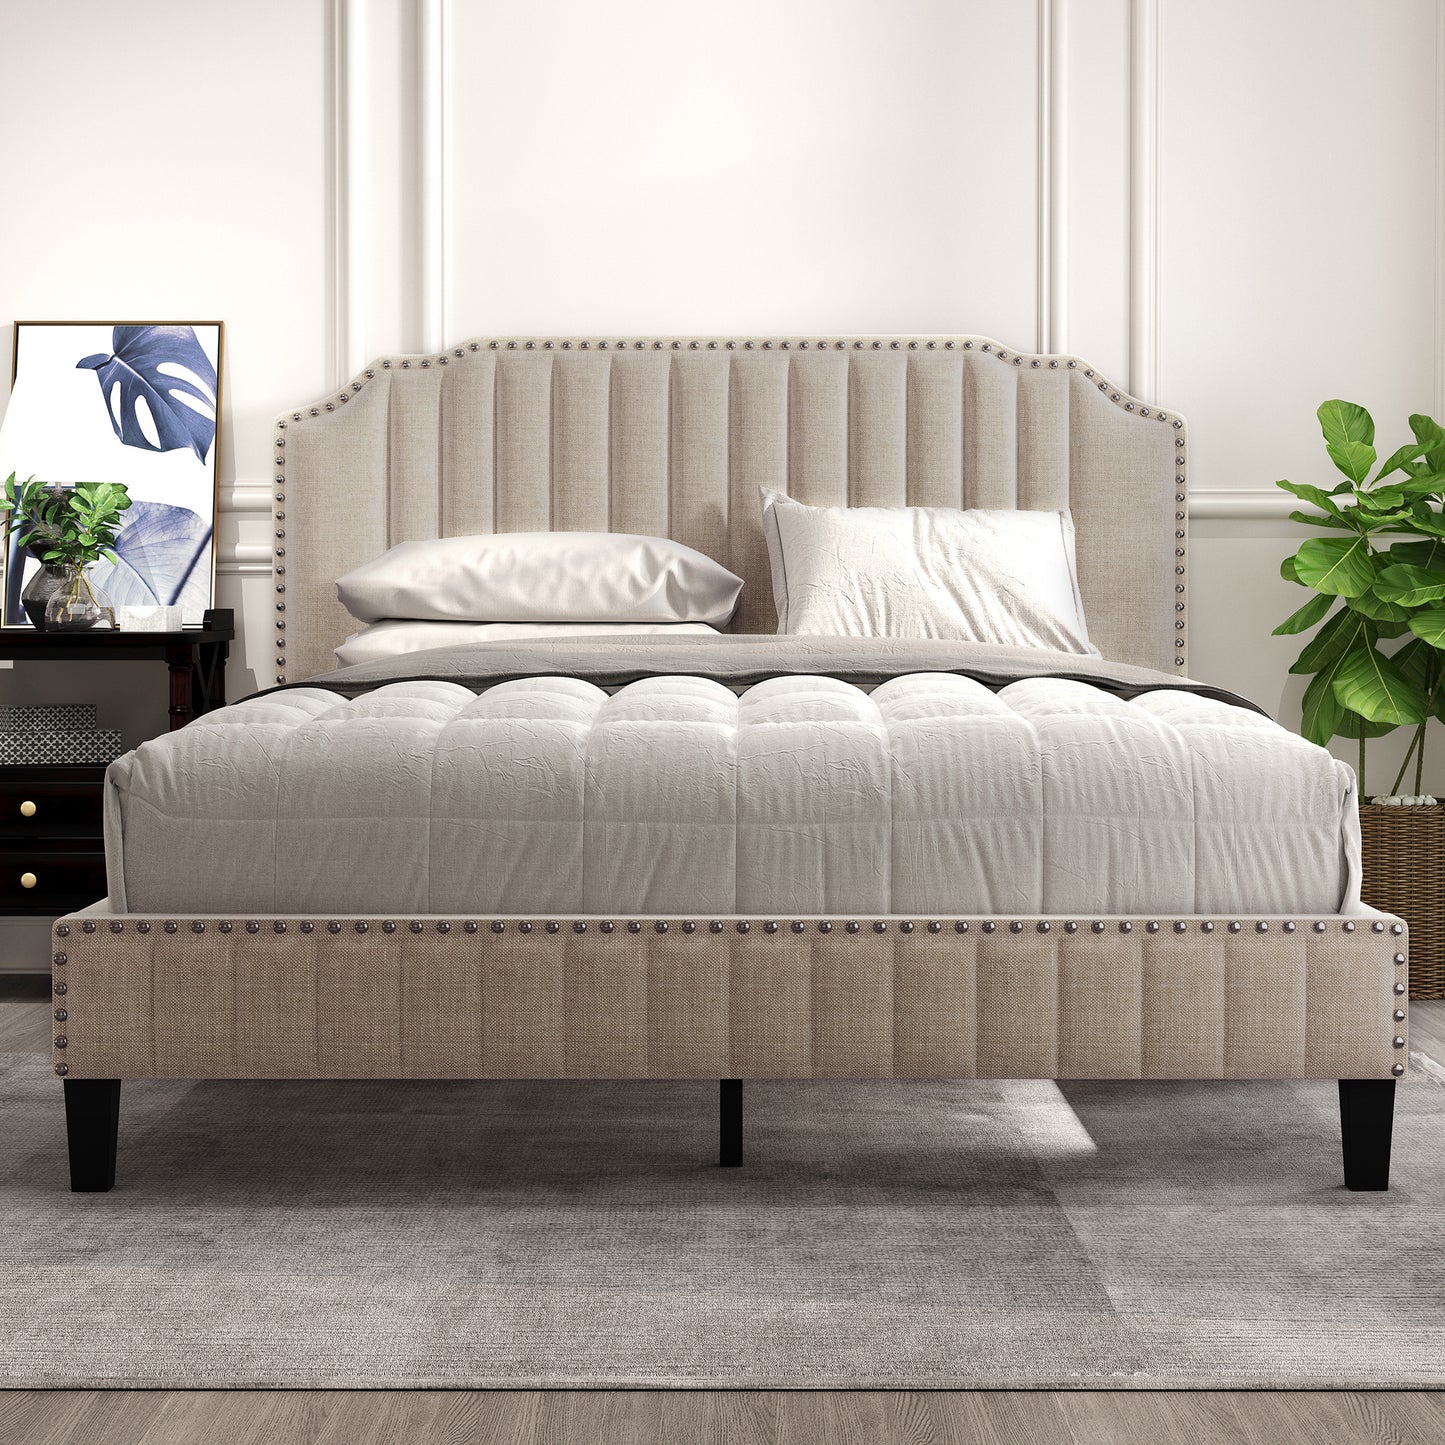 3 pieces bedroom set modern linen curved upholstered beige platform queen bed with two black cherry nightstands